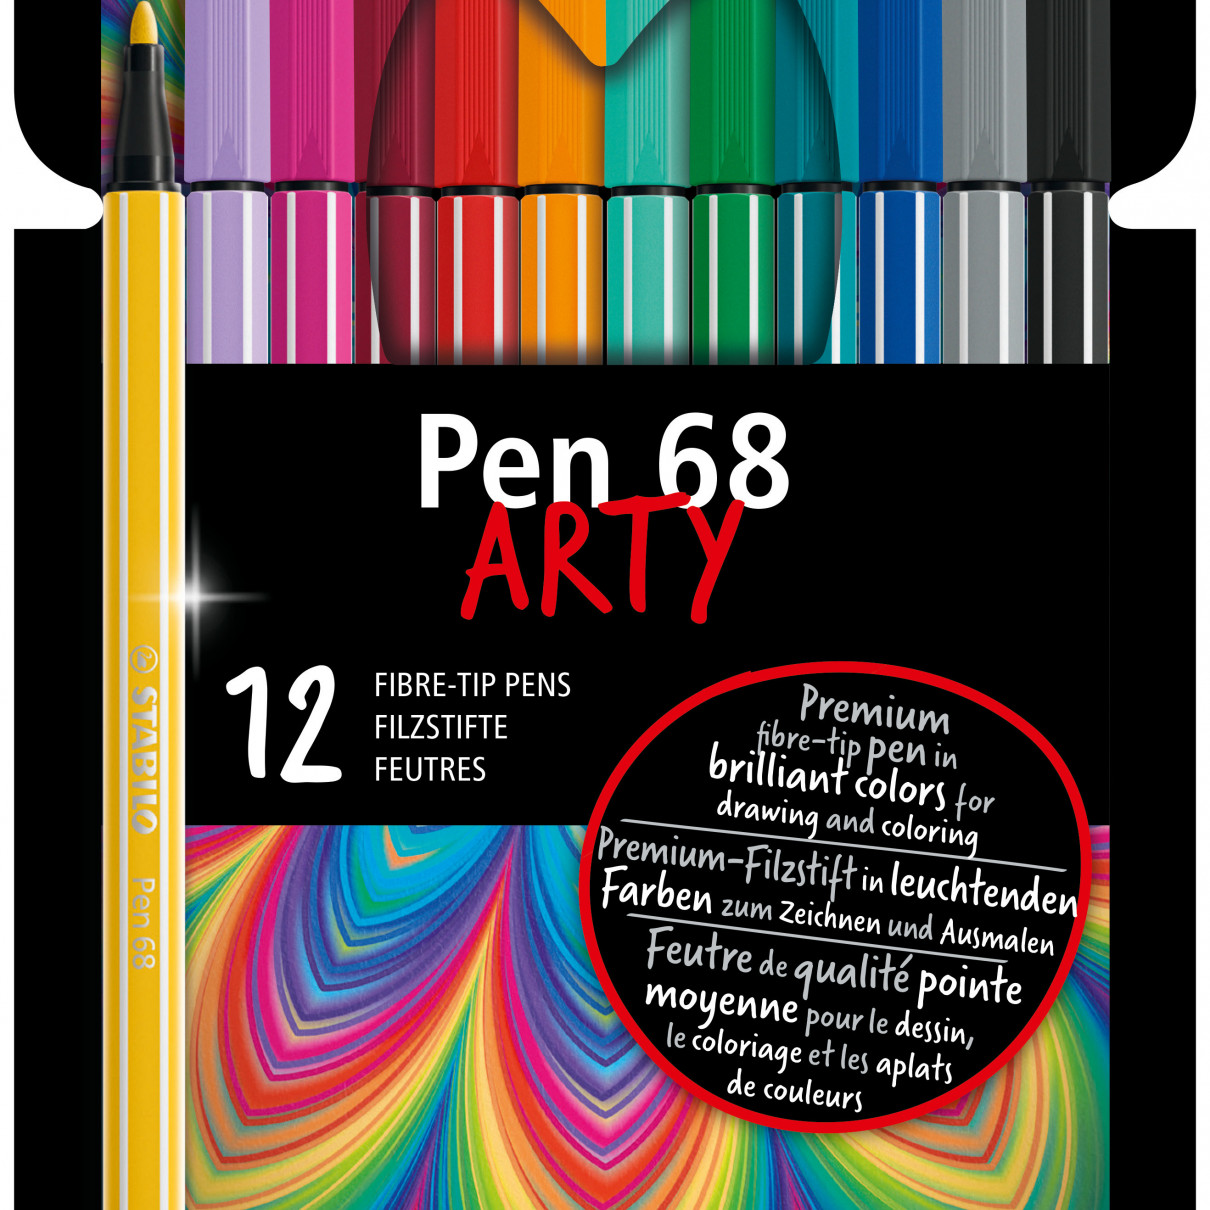  STABILO Premium Fibre-Tip Pen Pen 68 brush - Wallet of